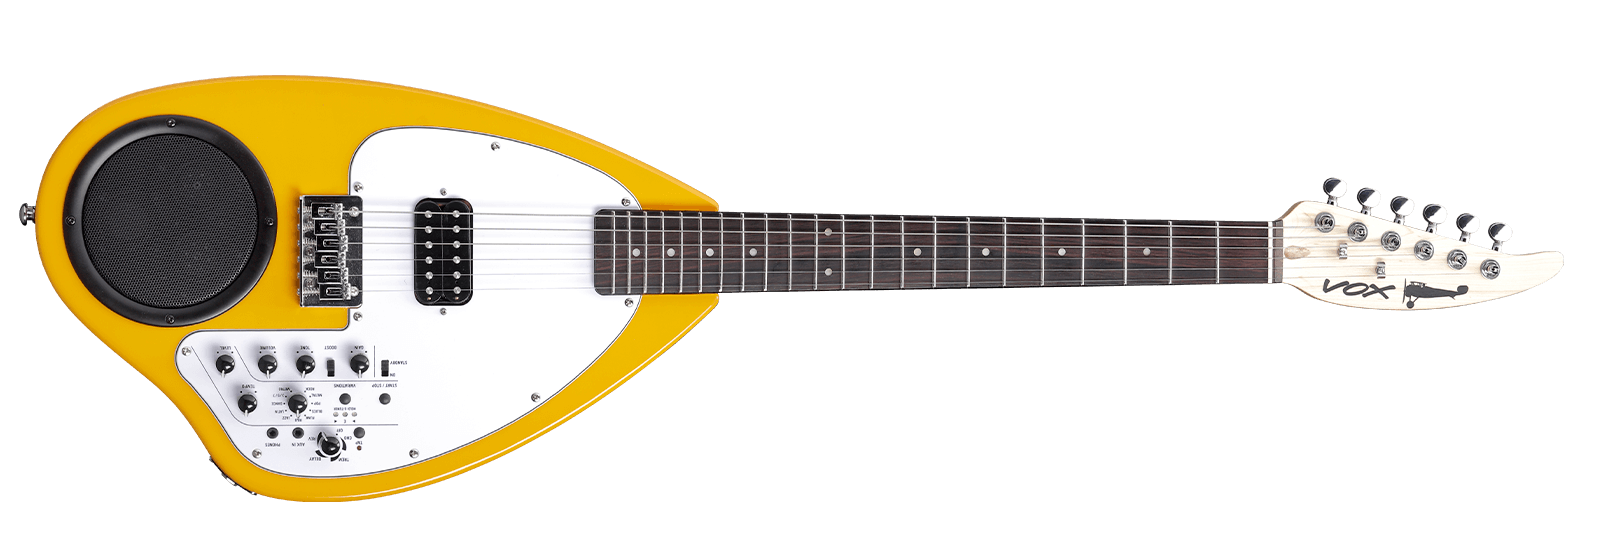 Vox APC-1 Travel Guitars With Built-In Amp And Rhythm Orange Metallic horizontal